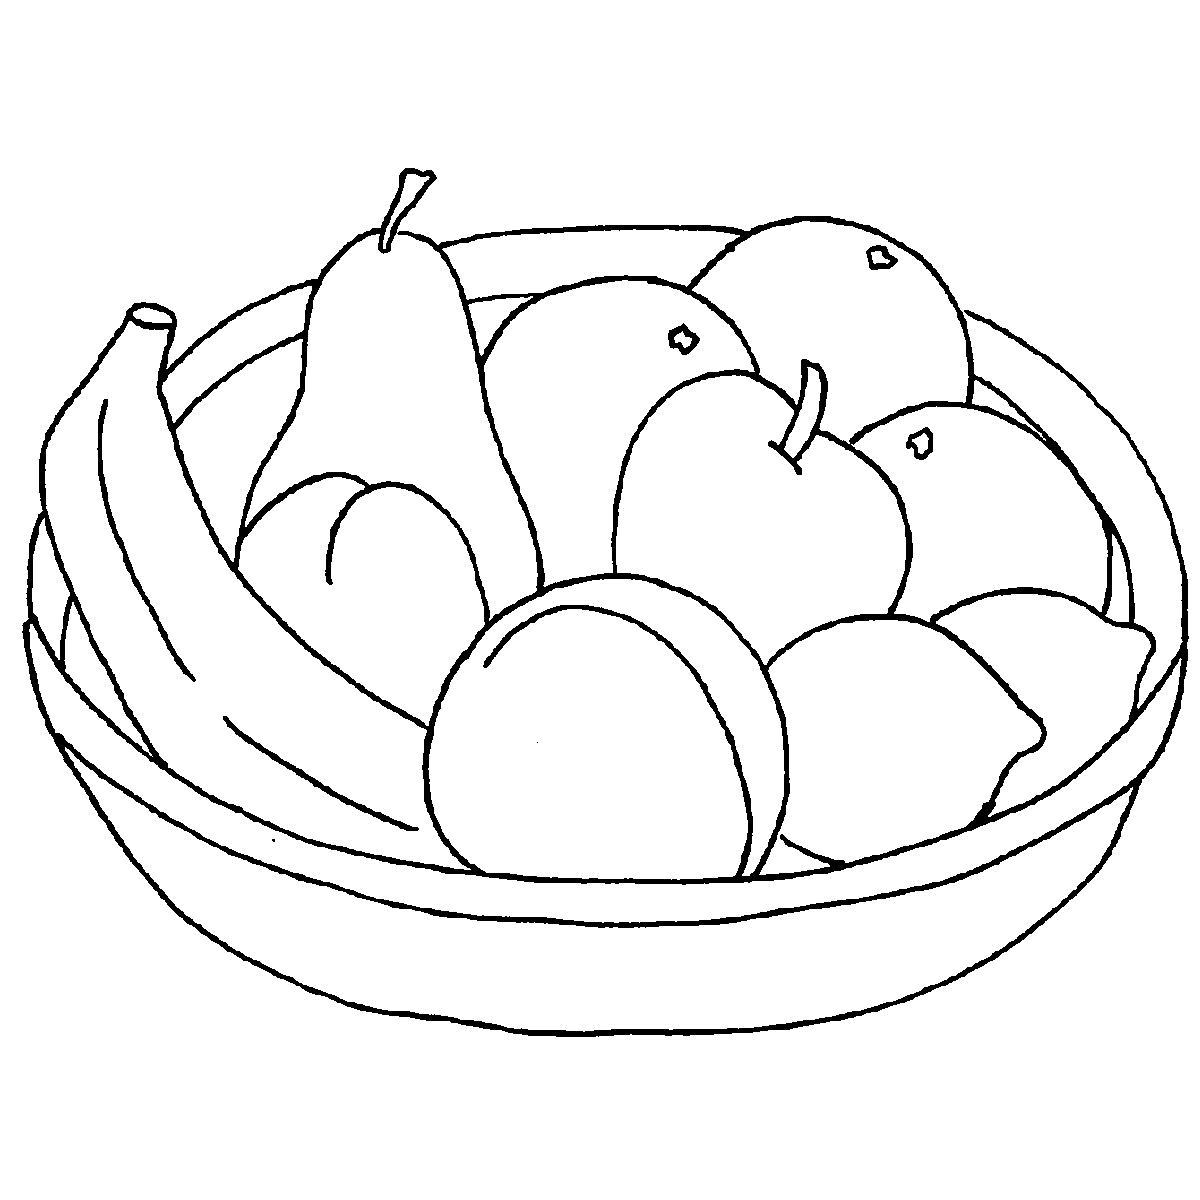 Тарелка с фруктами раскраска